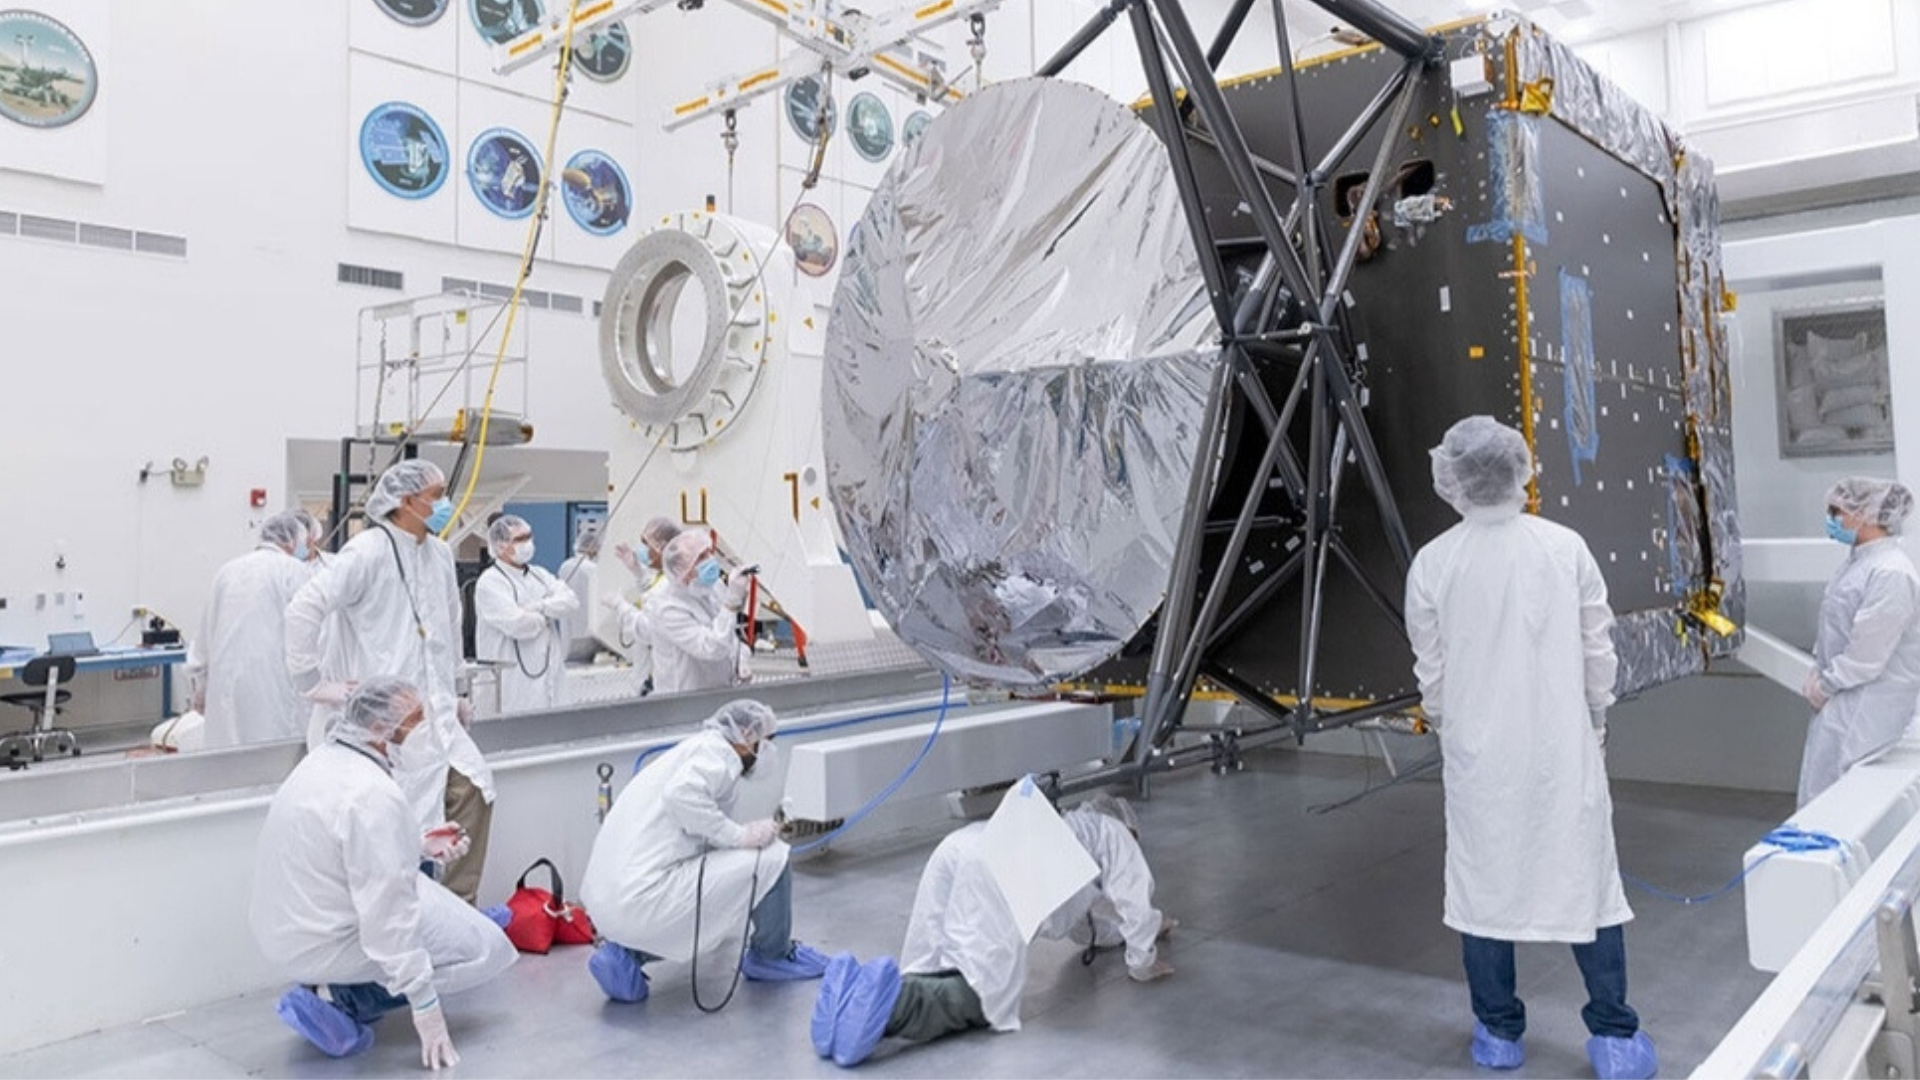 Engineers at NASA assembling spacecraft parts in a laboratory at Southern California